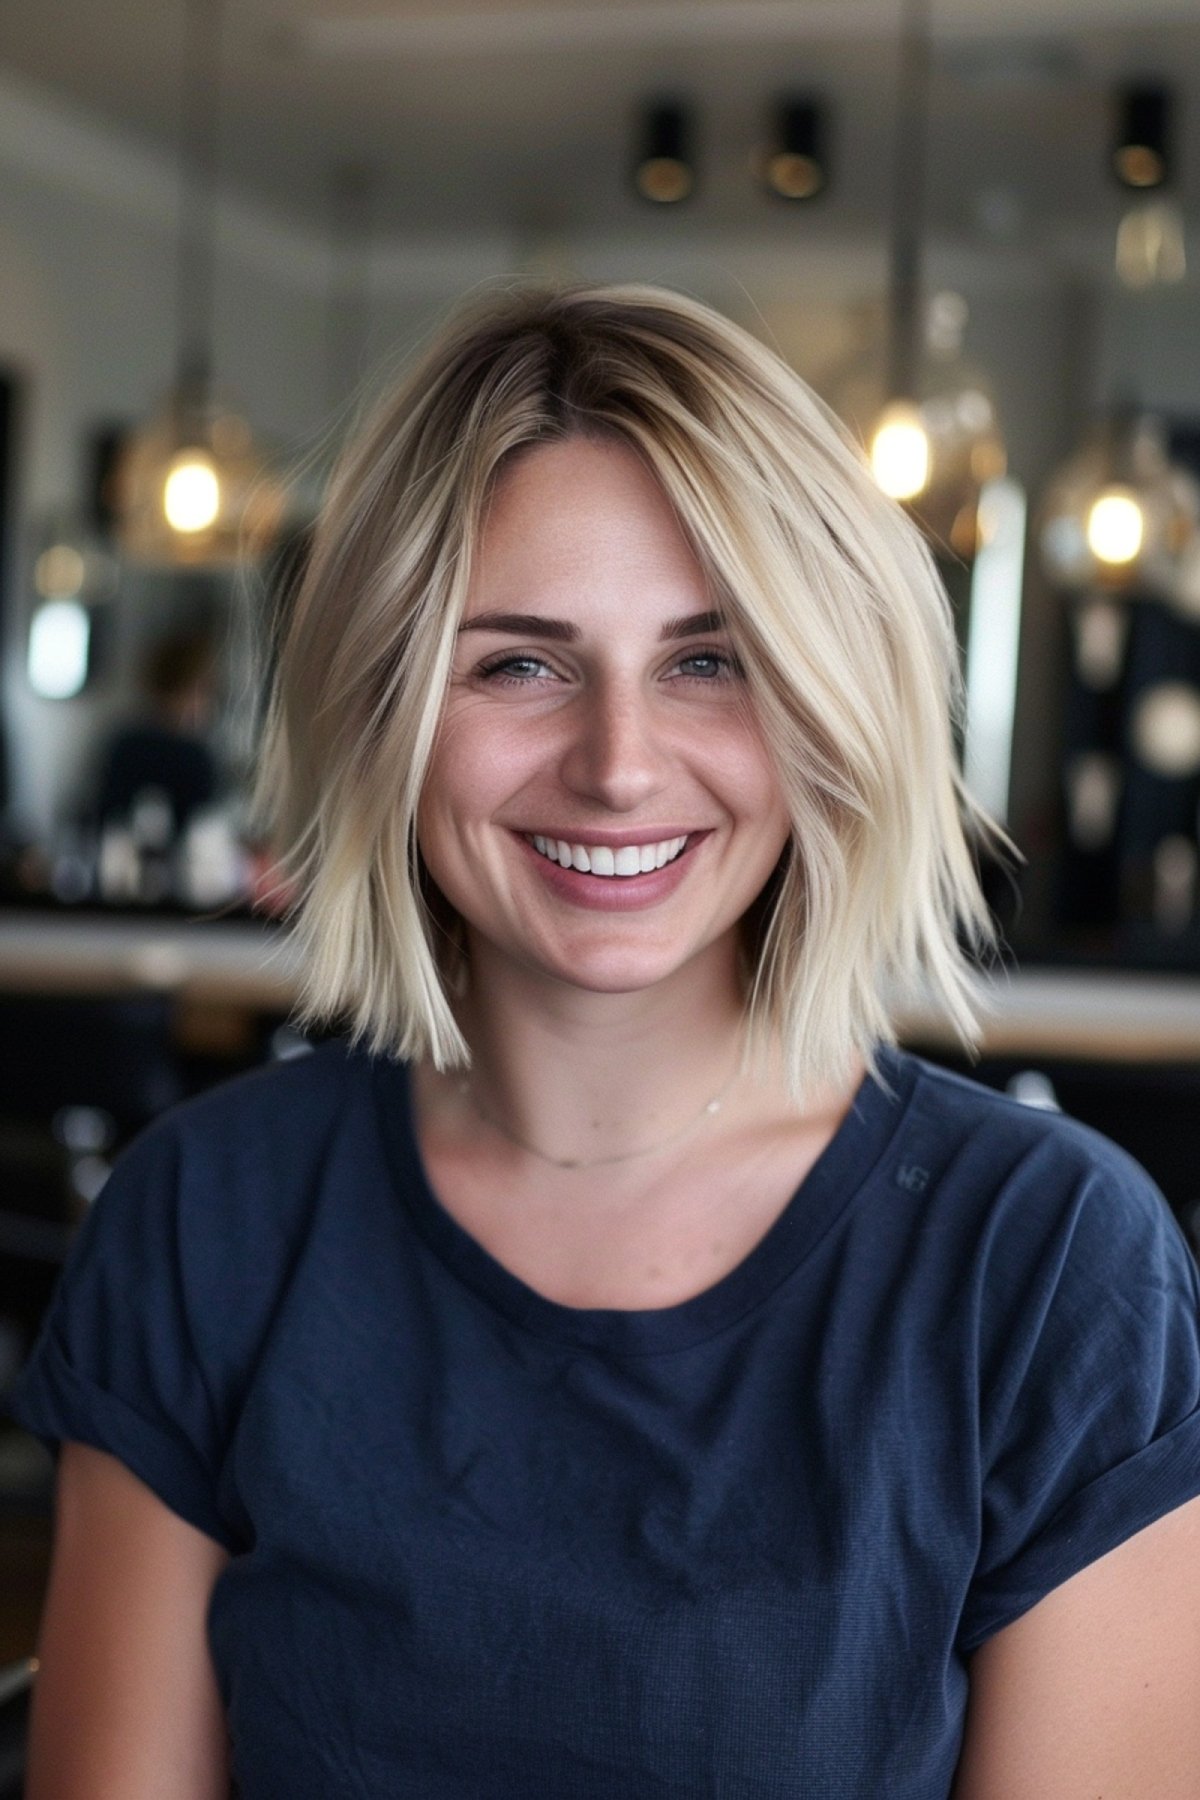 Woman with a sleek neck-length blonde bullet bob haircut